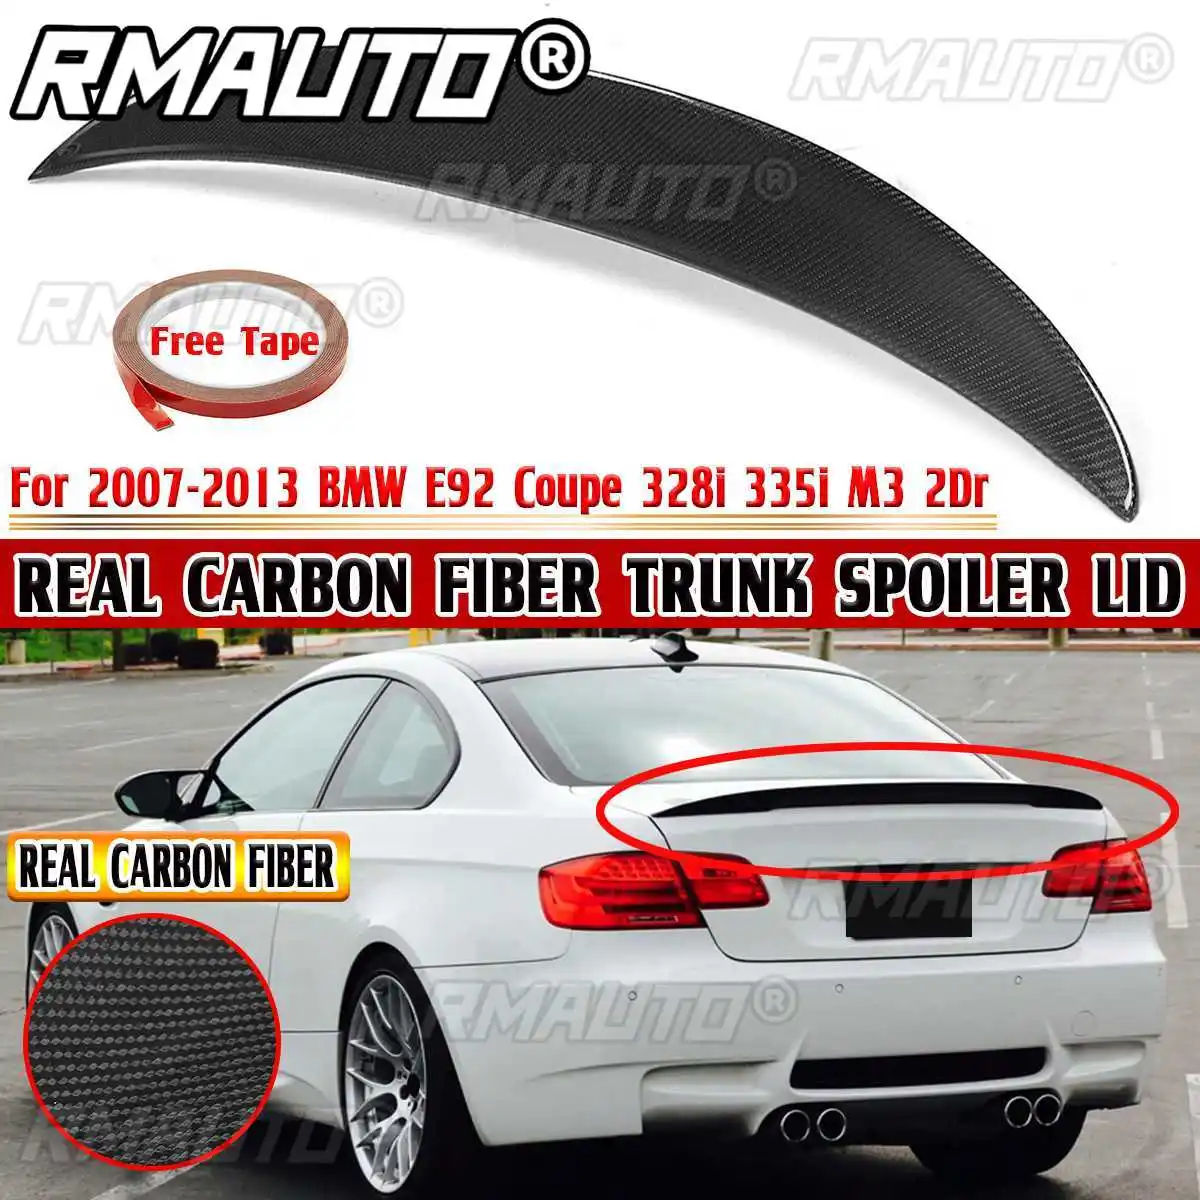 

Комплект для тела RMAUTO E92 из настоящего углеродного волокна, передний бампер, боковая юбка, задний спойлер, задний сплиттер для BMW E92 Coupe M-Tech 2010-2013